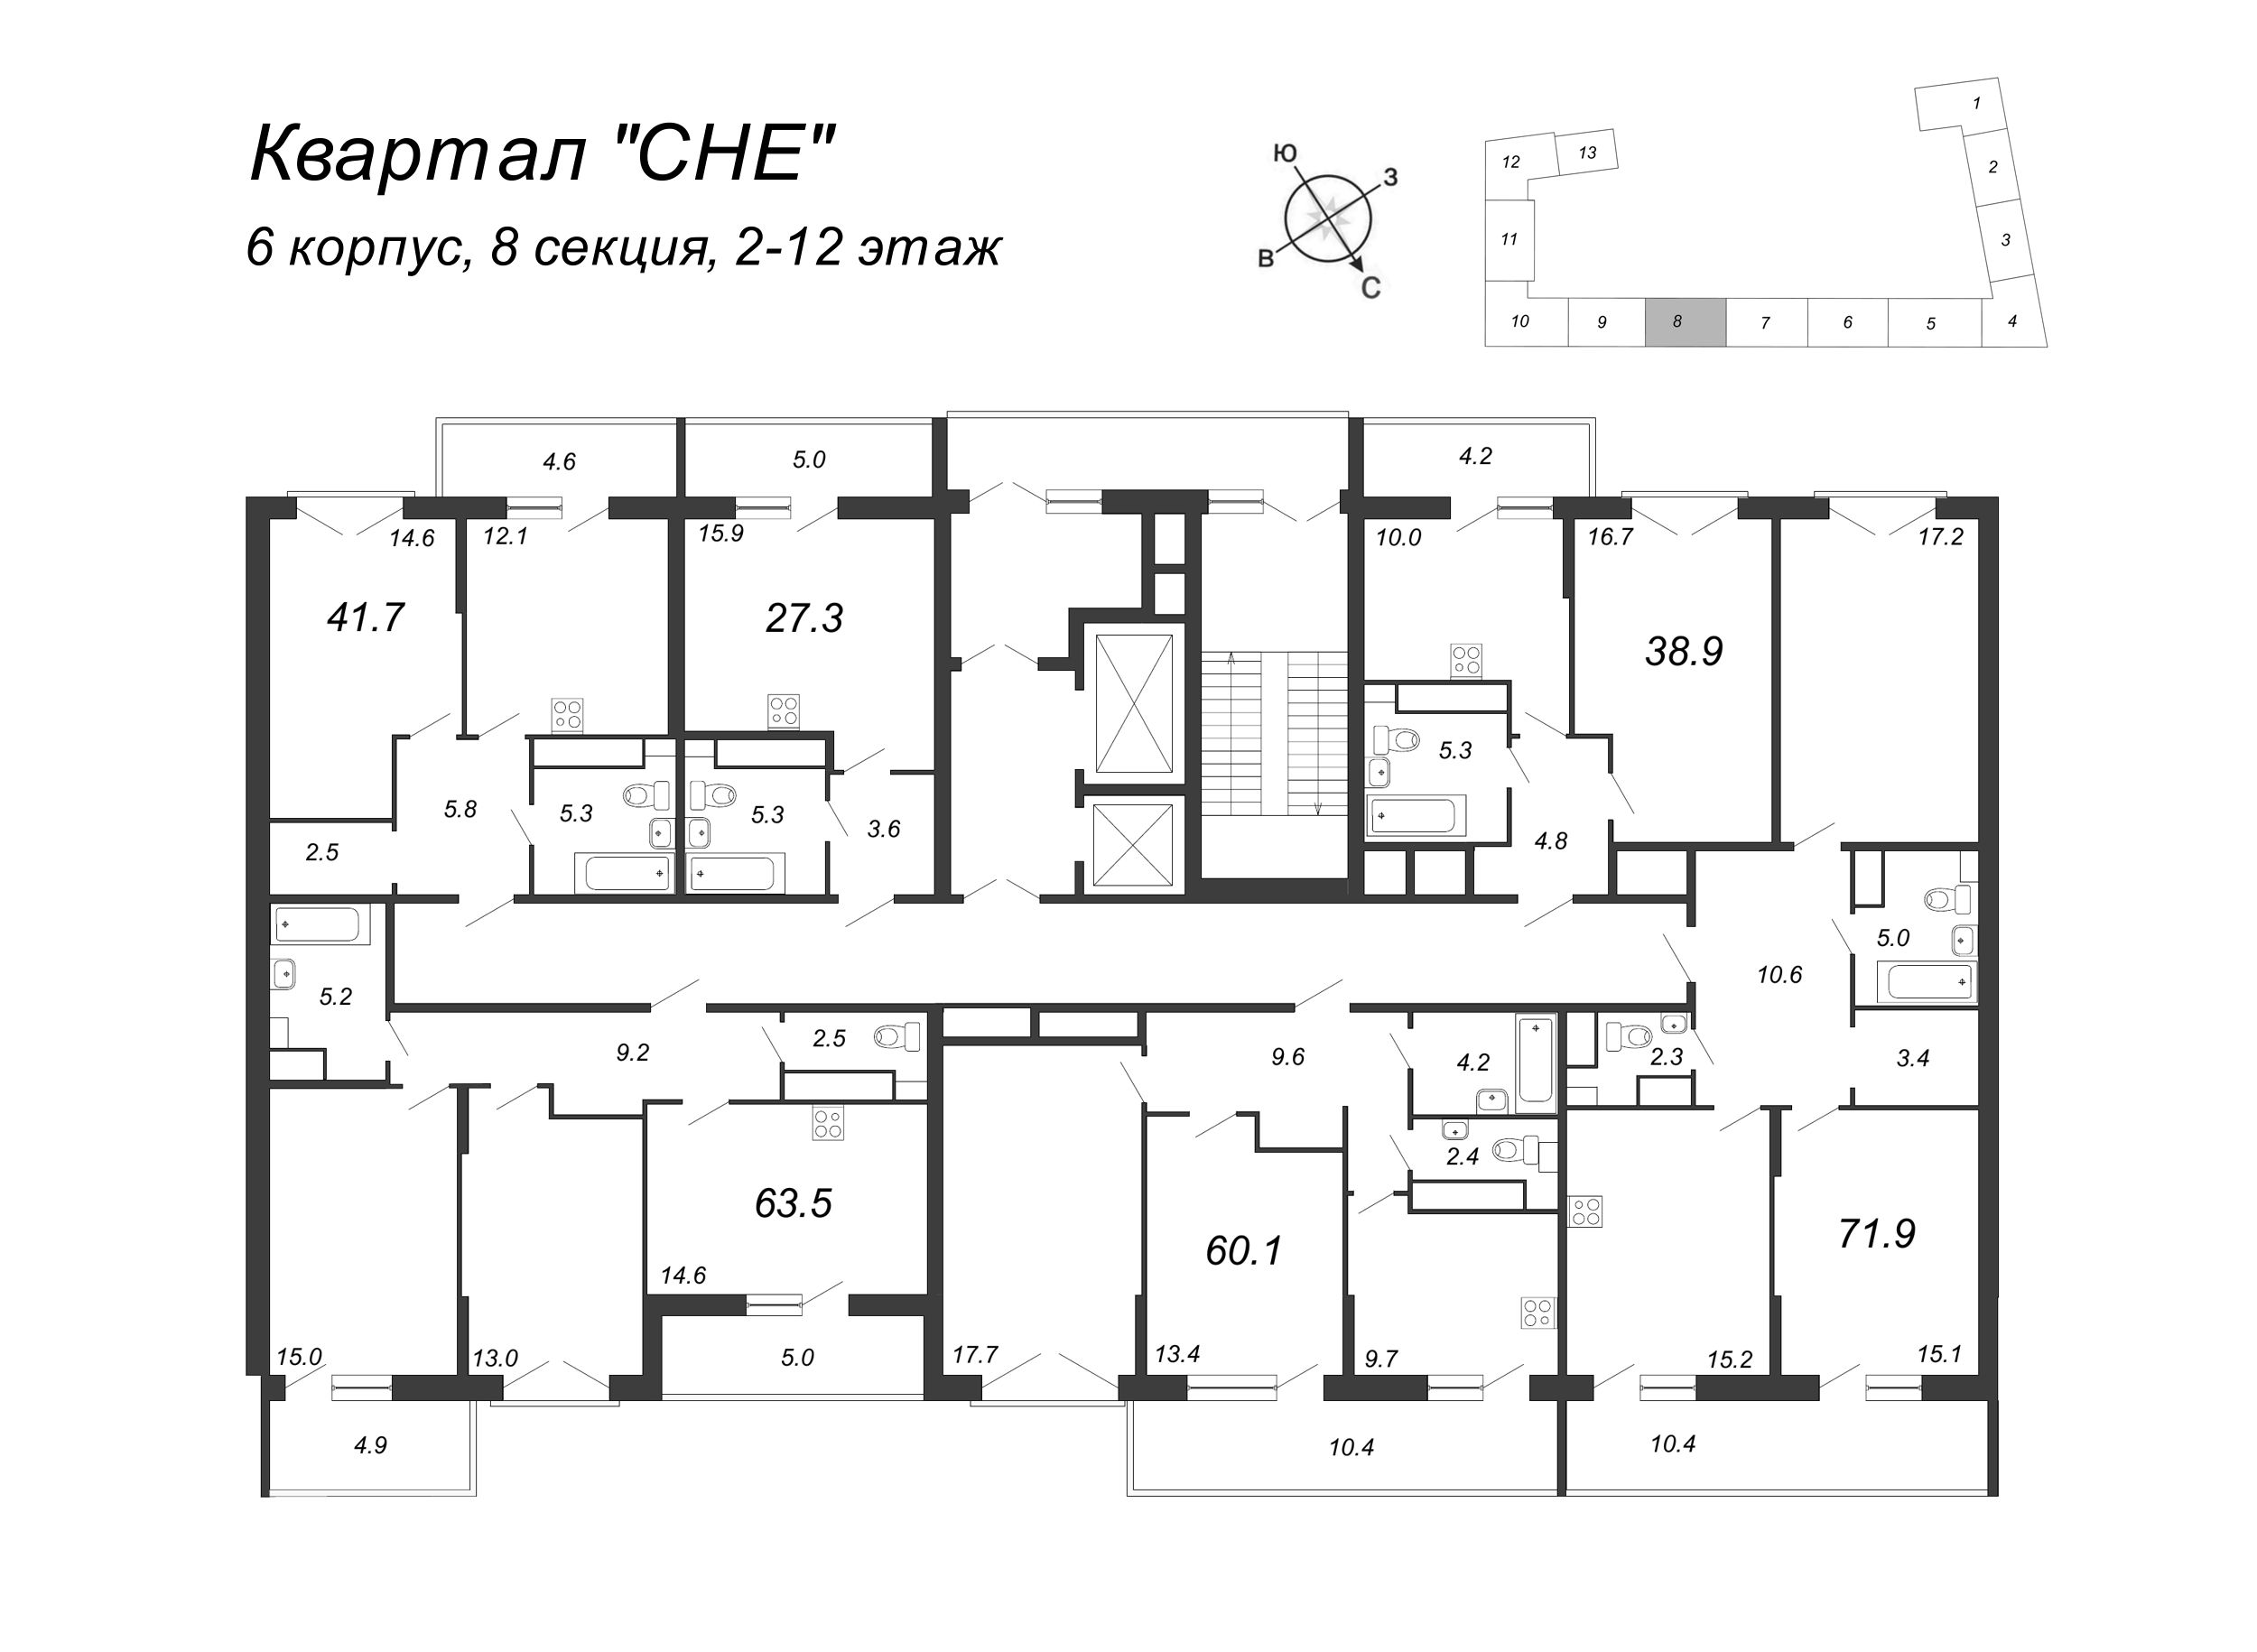 1-комнатная квартира, 39.2 м² в ЖК "Квартал Che" - планировка этажа